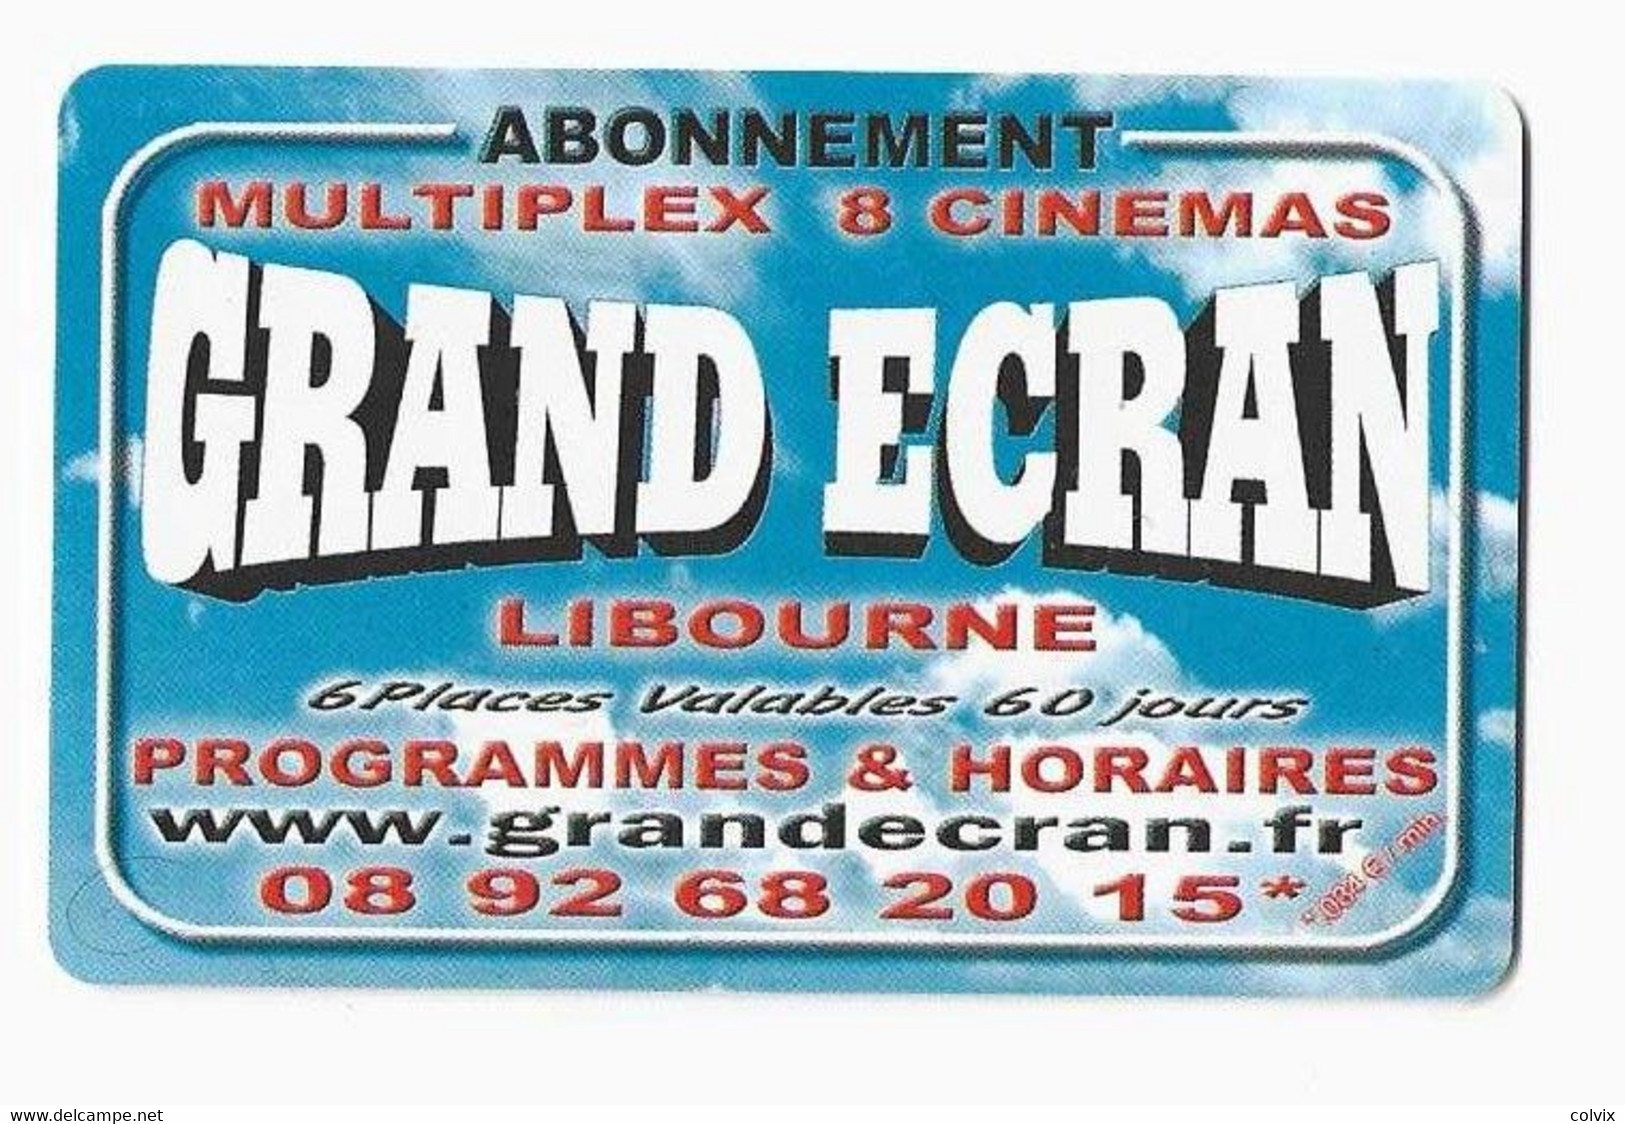 FRANCE CARTE CINEMA GRAND ECRAN LIBOURNE - Entradas De Cine